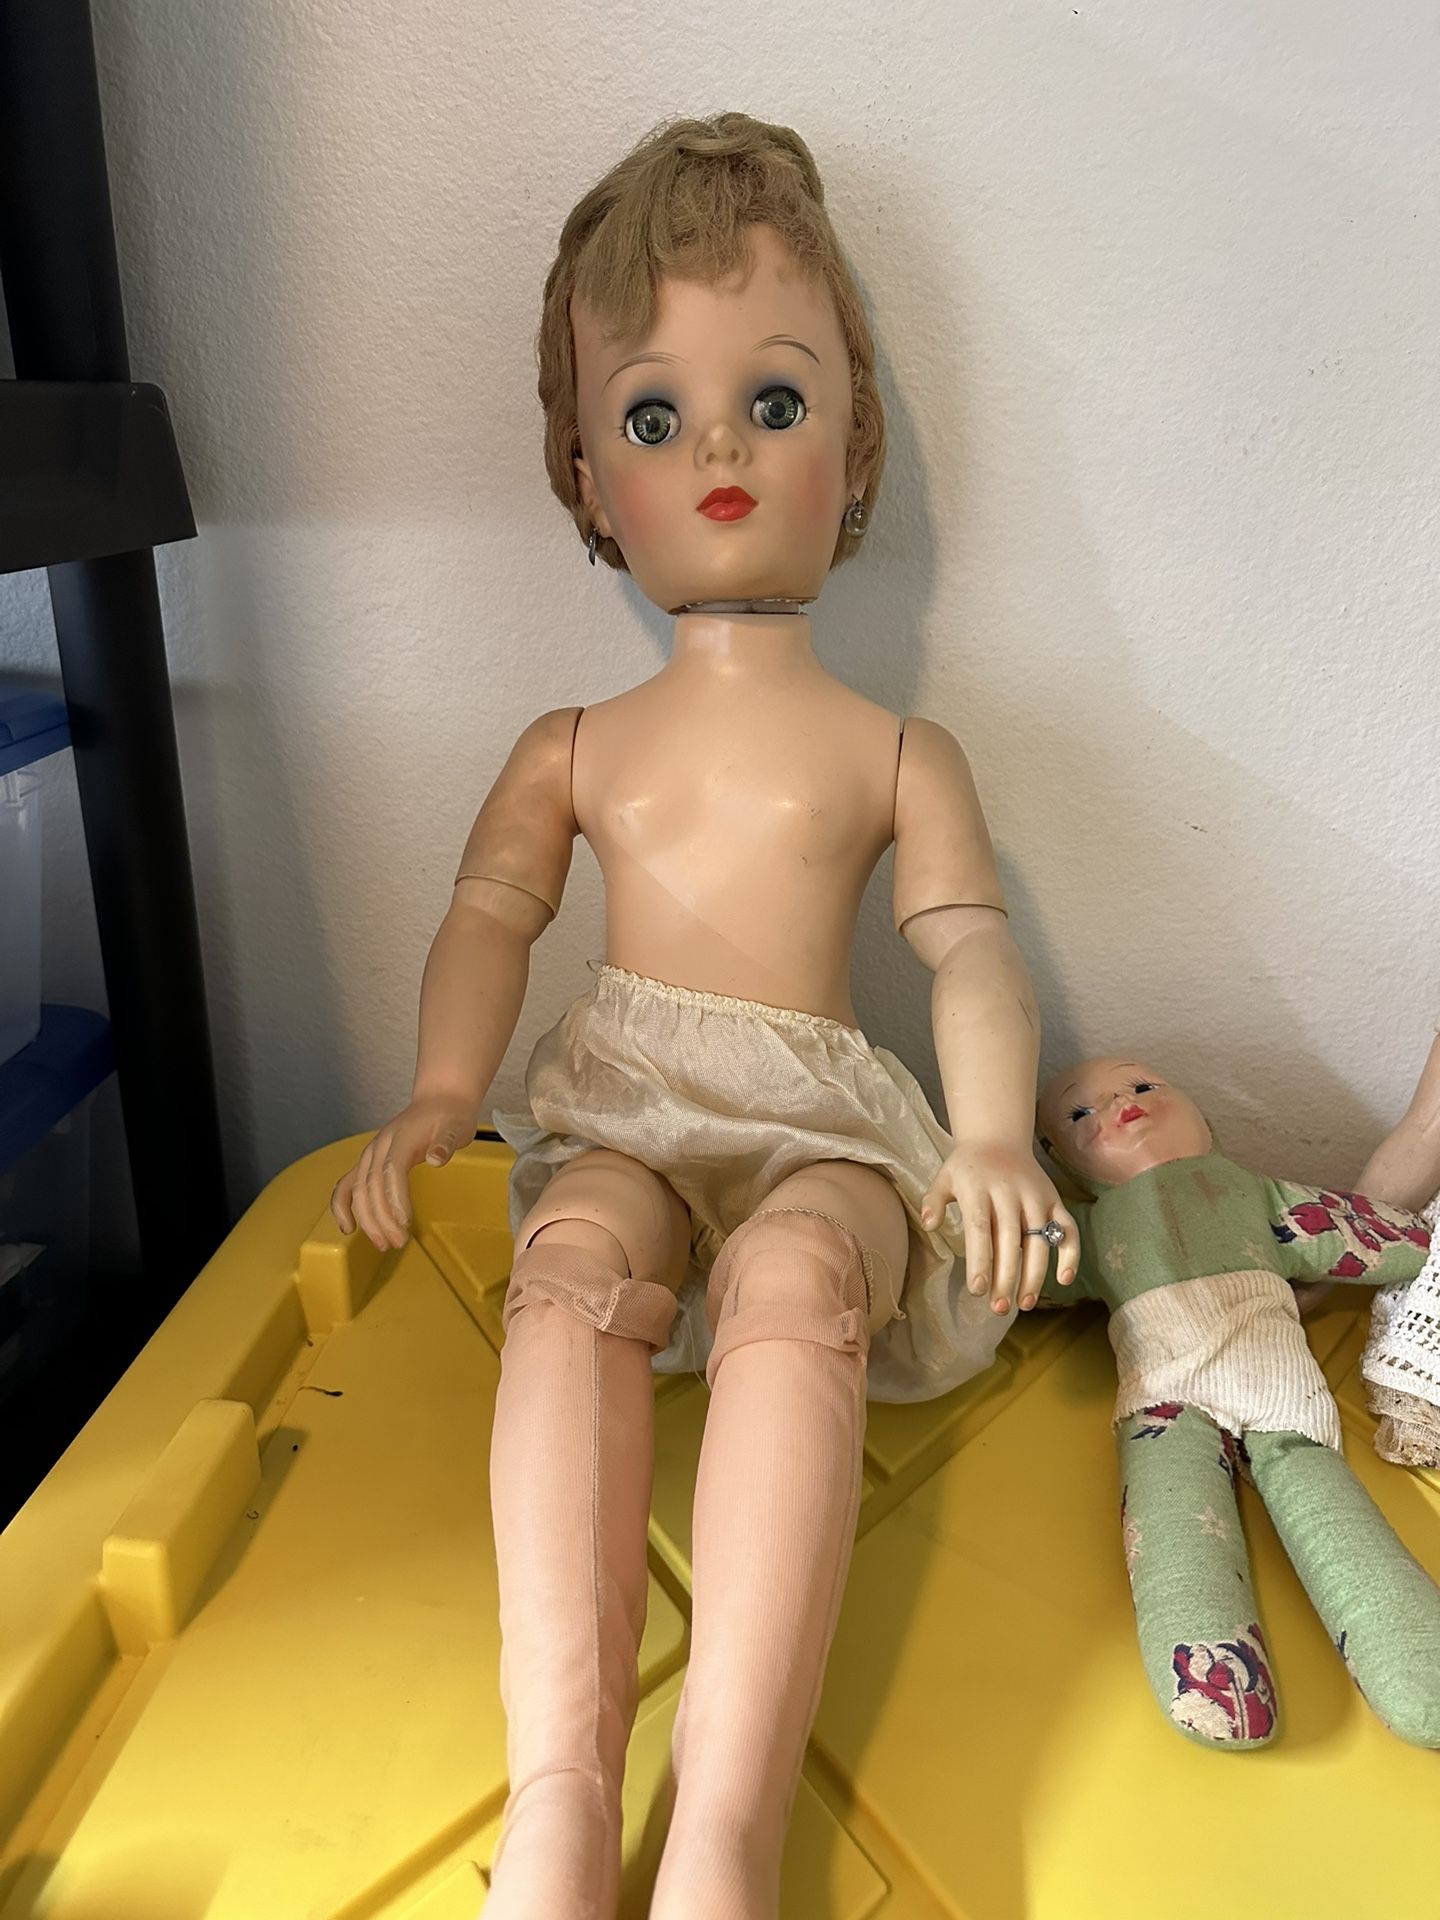 Original Vintage 1959 14” Doll Shari Lewis by Madame Alexander.   Best Offer